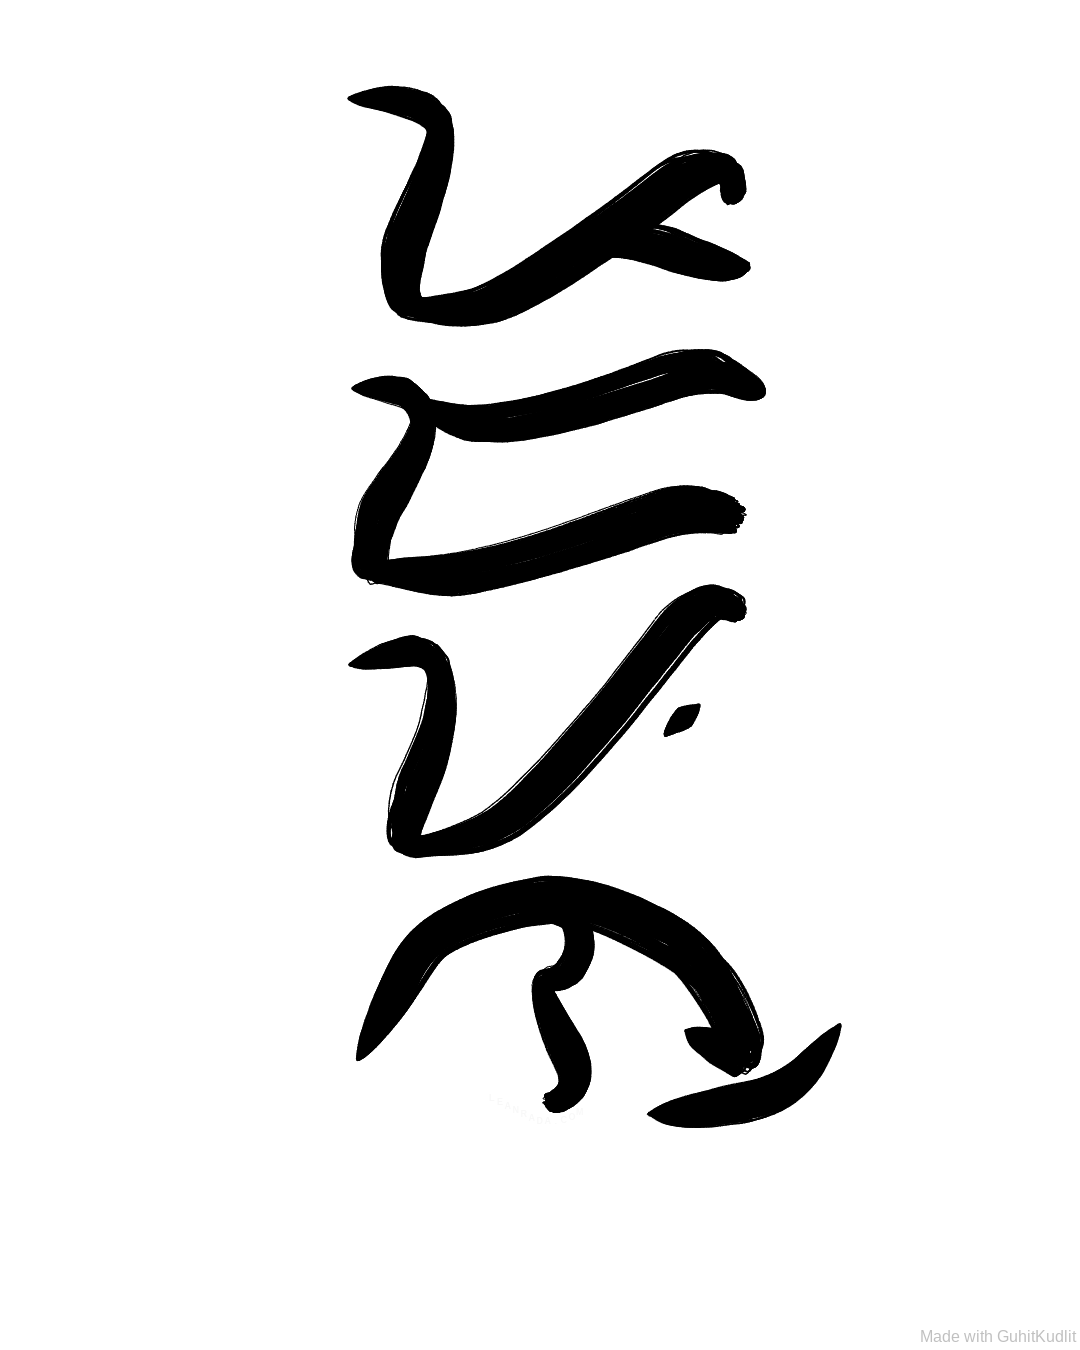 Generated baybayin calligraphy of the word ‘padayon’